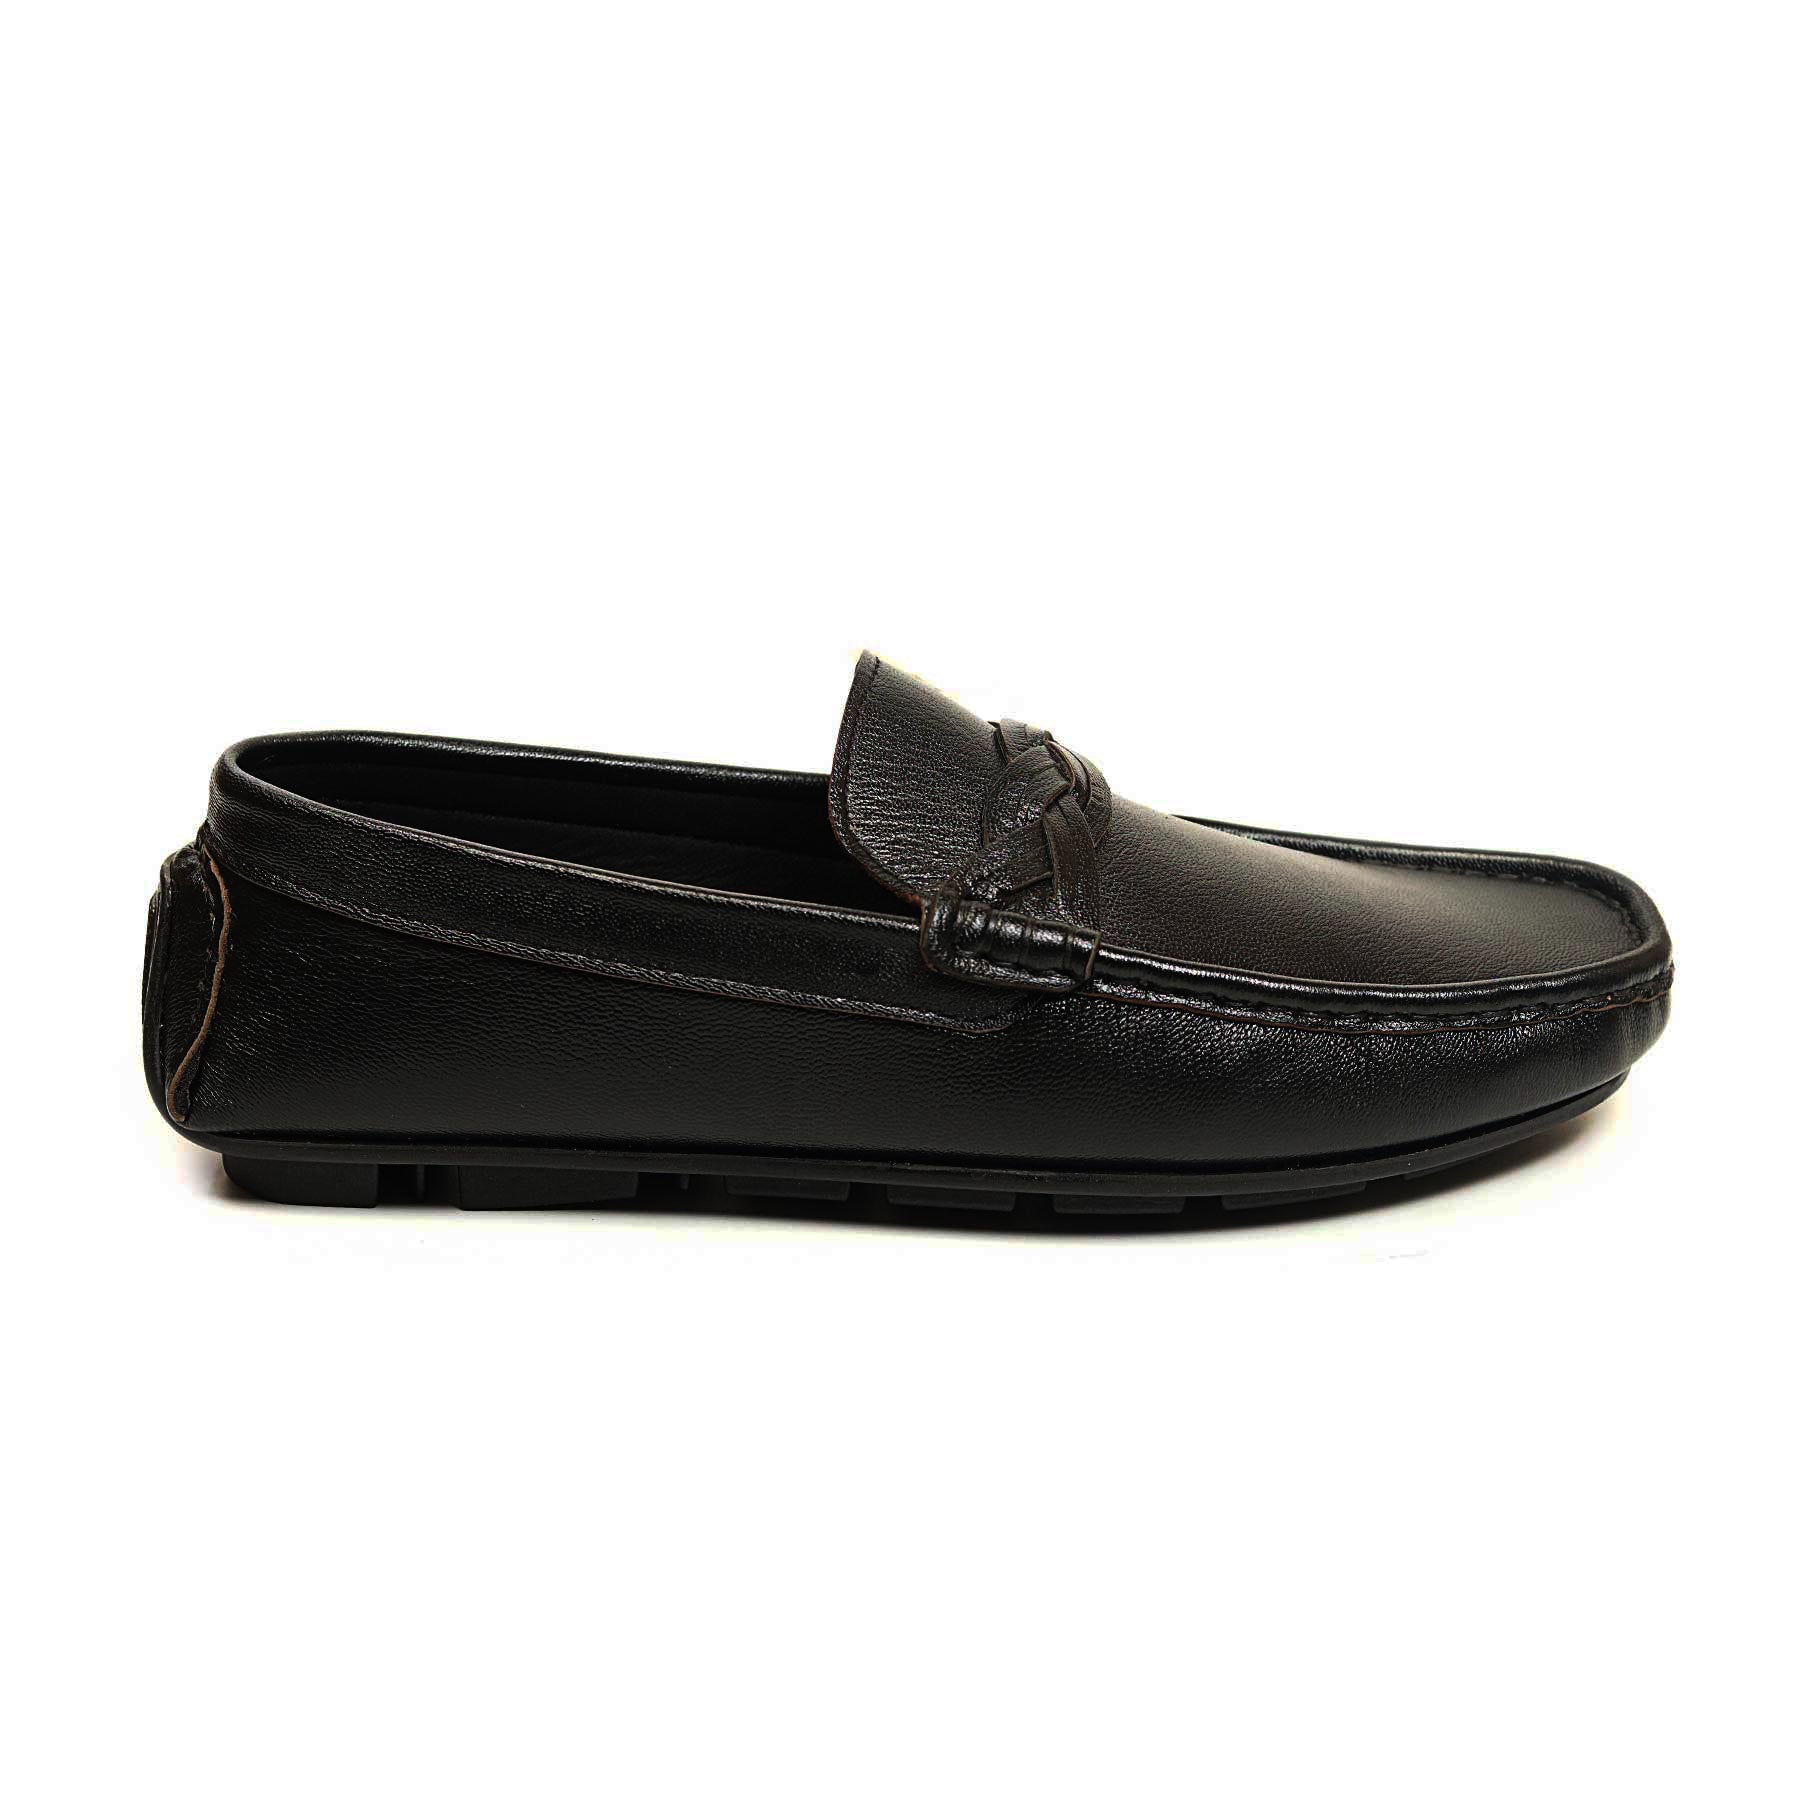 Zays Leather Trendy Loafer For Men (Black) - SF85